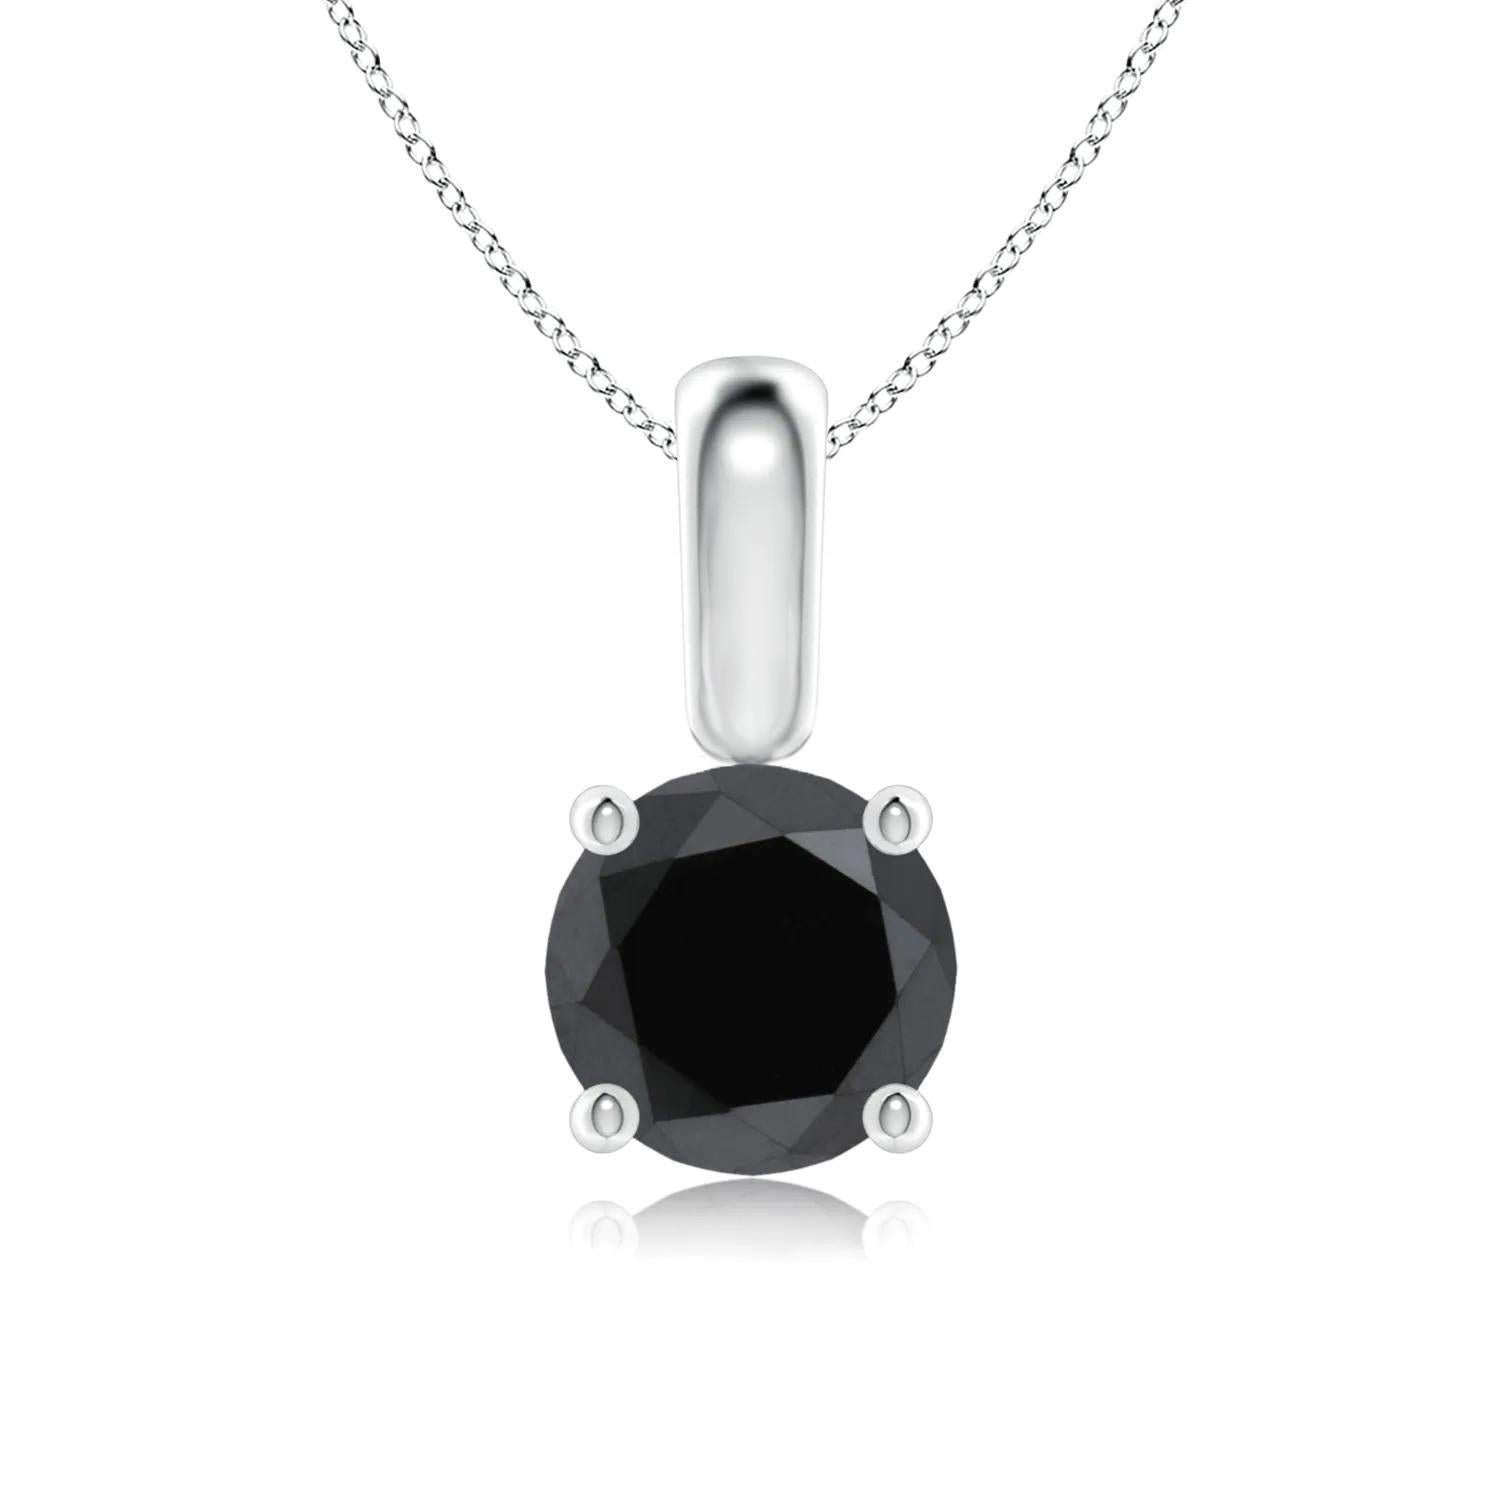 Contemporary 1.6 Carat Round Black Diamond Solitaire Pendant Necklace in 14K White Gold